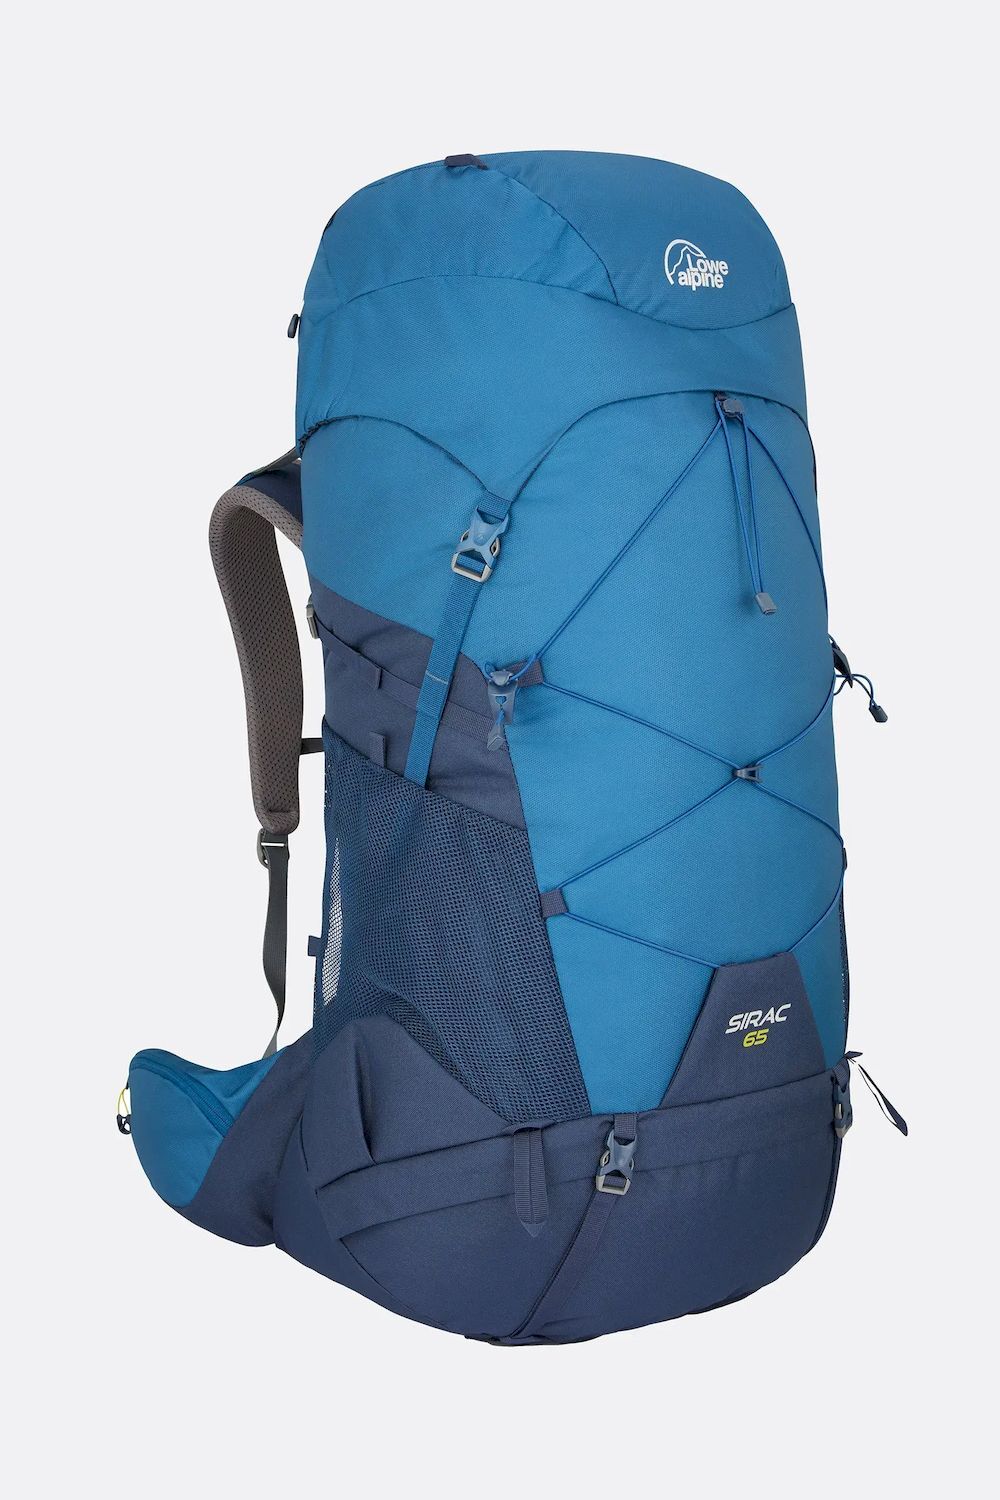 Lowe Alpine Sirac 65 - Walking backpack - Men's